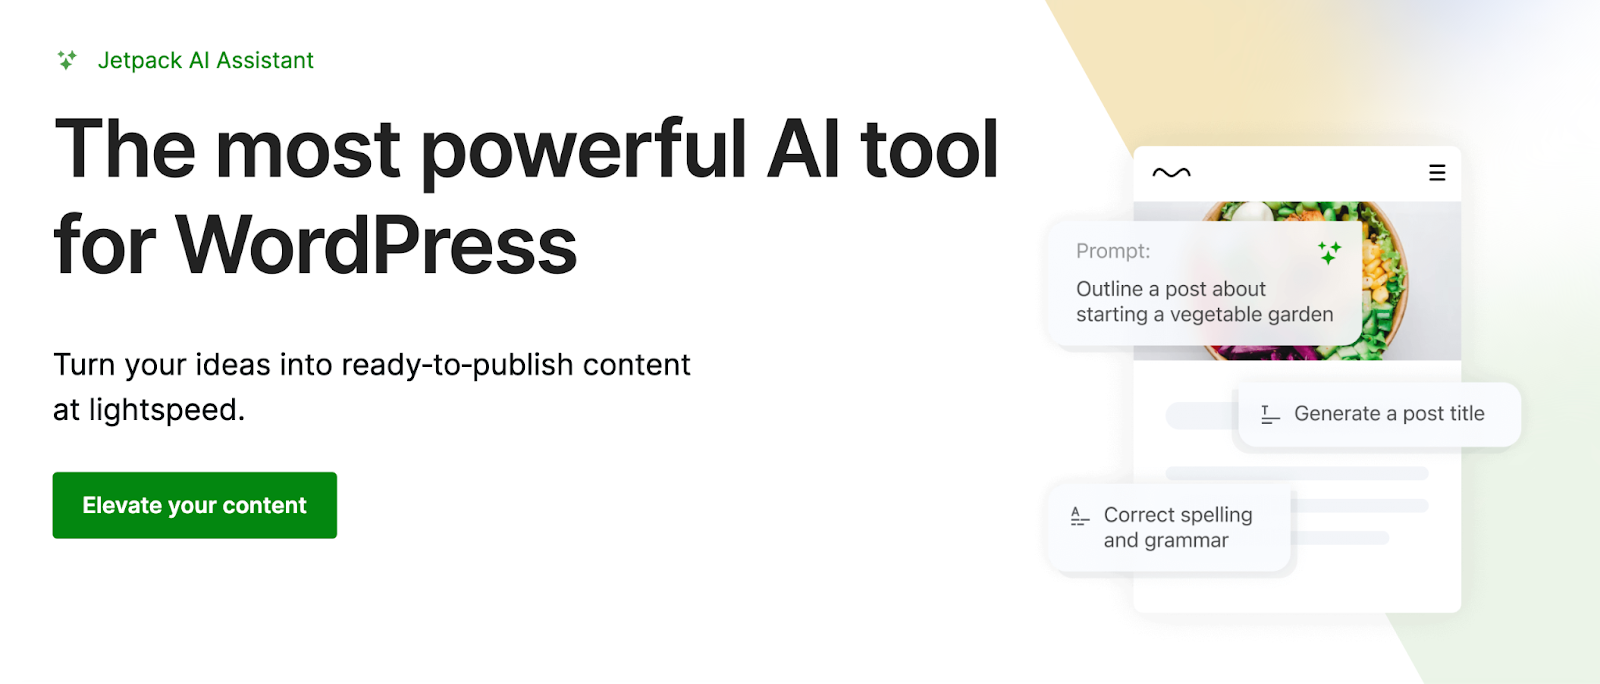 Jetpack AI 助手可让您在几分钟内将想法转变为高质量的内容，使其成为 WordPress 最强大、最有用的 AI 插件之一。